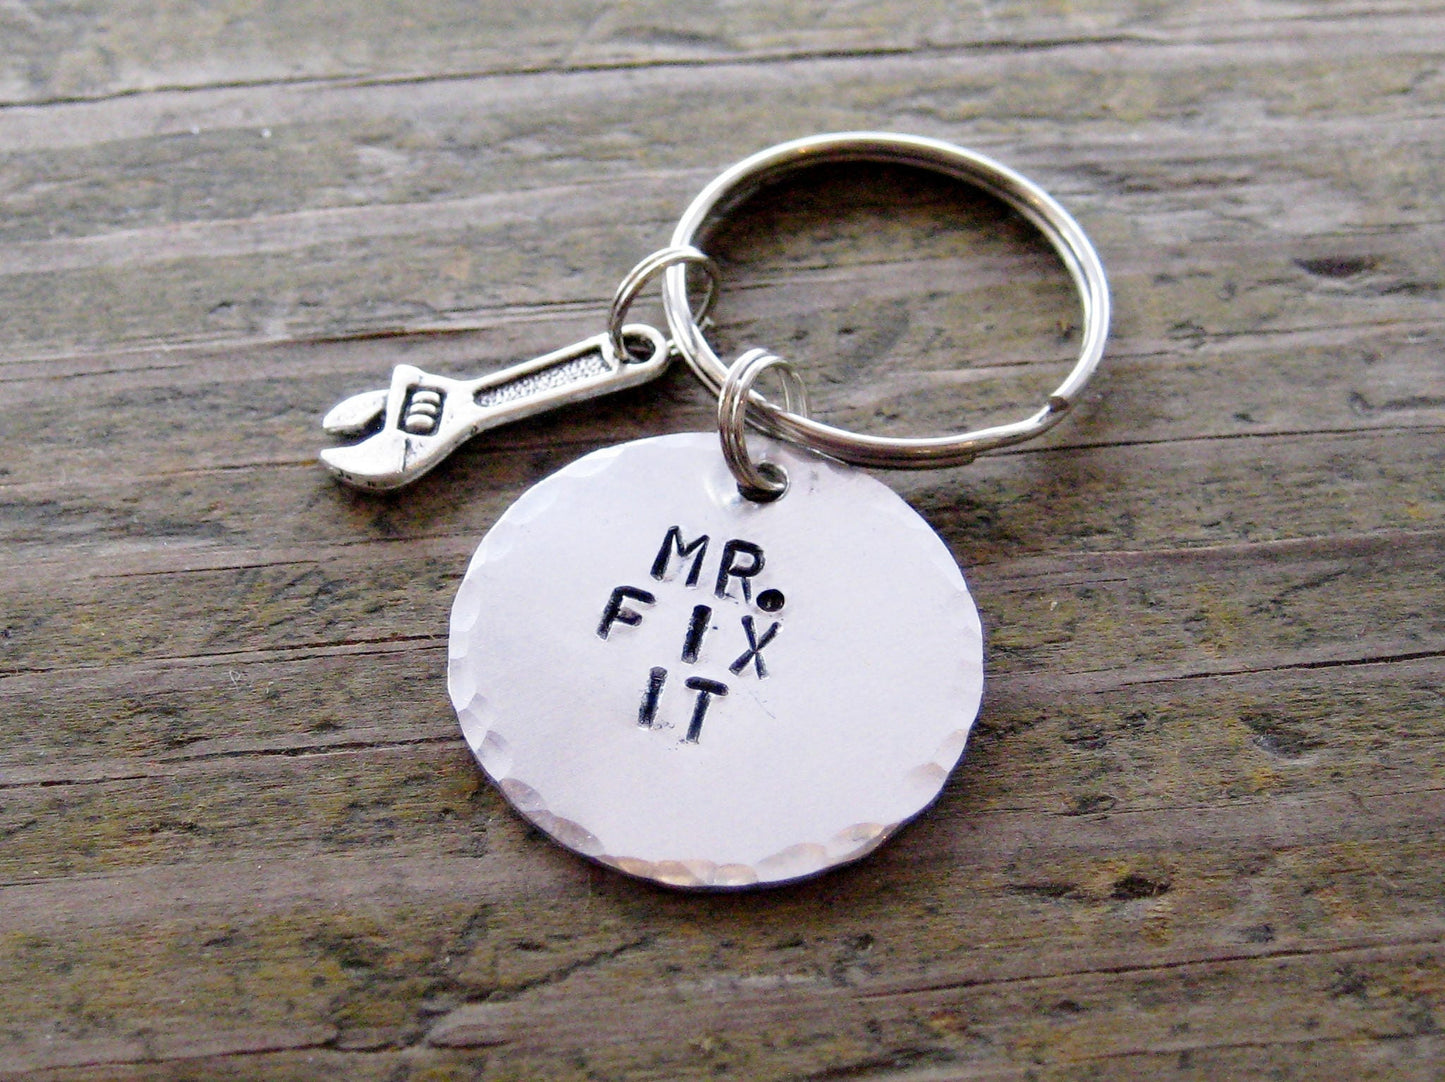 Keychain for Dad, Dad Keychain, Mr. Fix It, Gift for Dad, Father's Day keychain, Gift For Father's Day, Dad Gift, Keychain for Dad